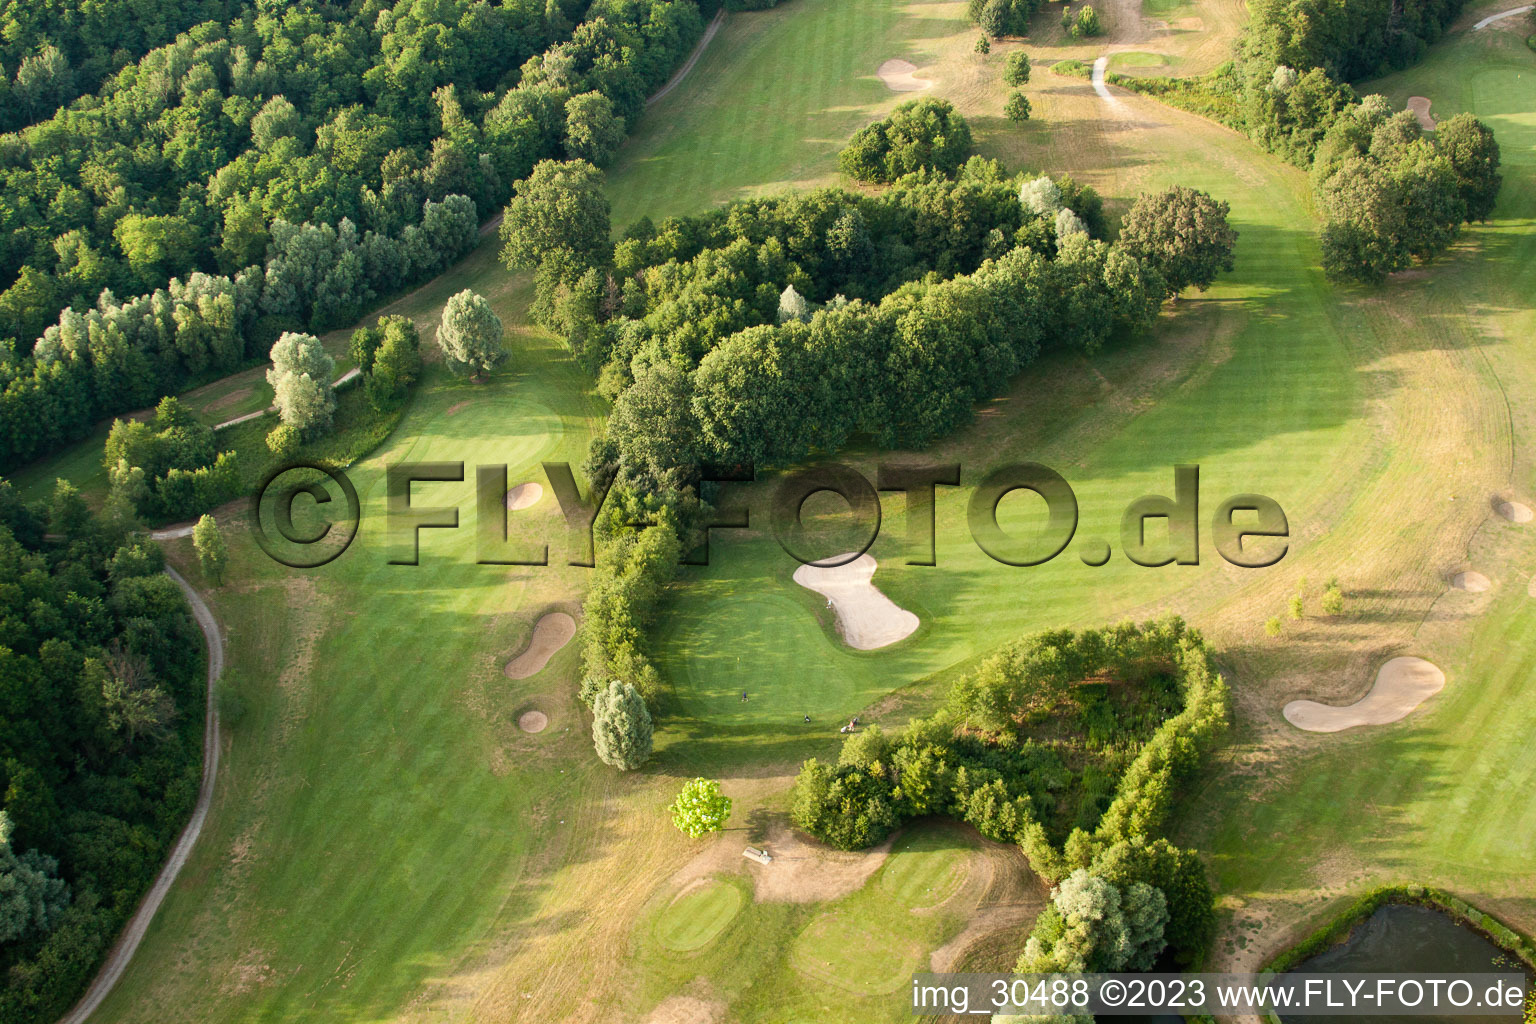 Photographie aérienne de Club de golf Soufflenheim Baden-Baden à Soufflenheim dans le département Bas Rhin, France